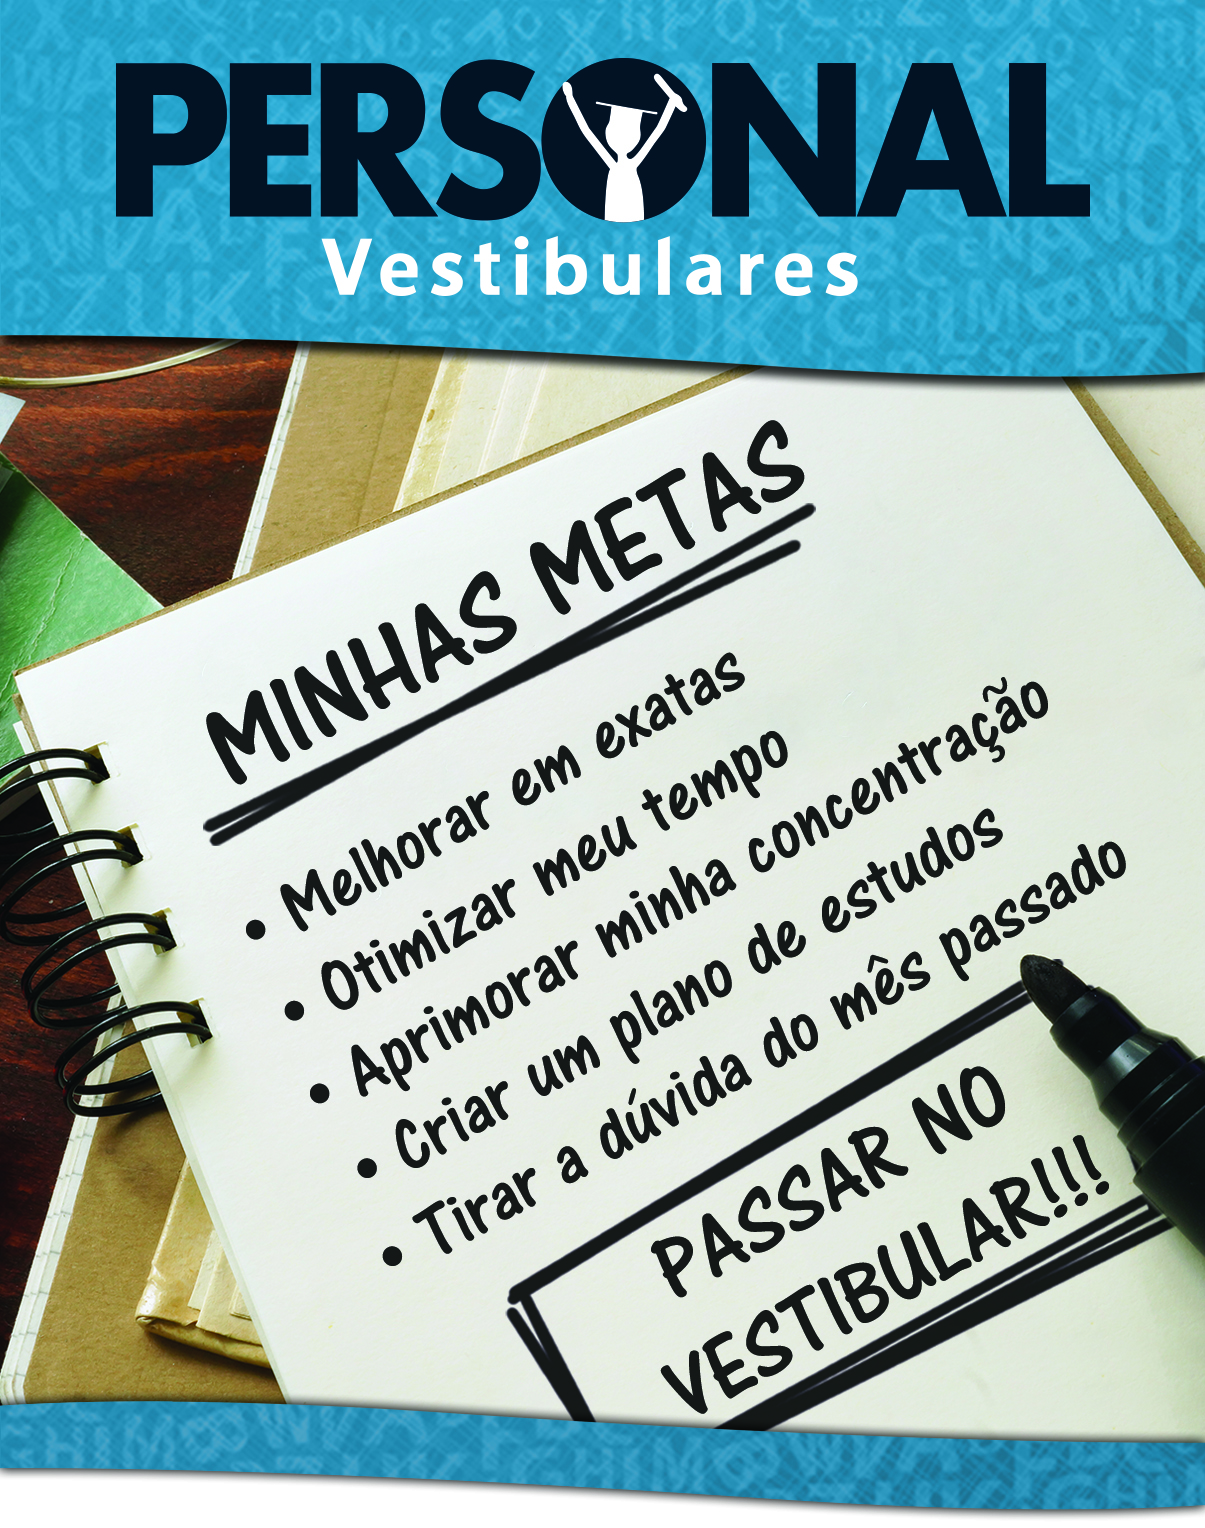 Personal Vestibulares - Curso Preparatrio para o Enem em So Paulo